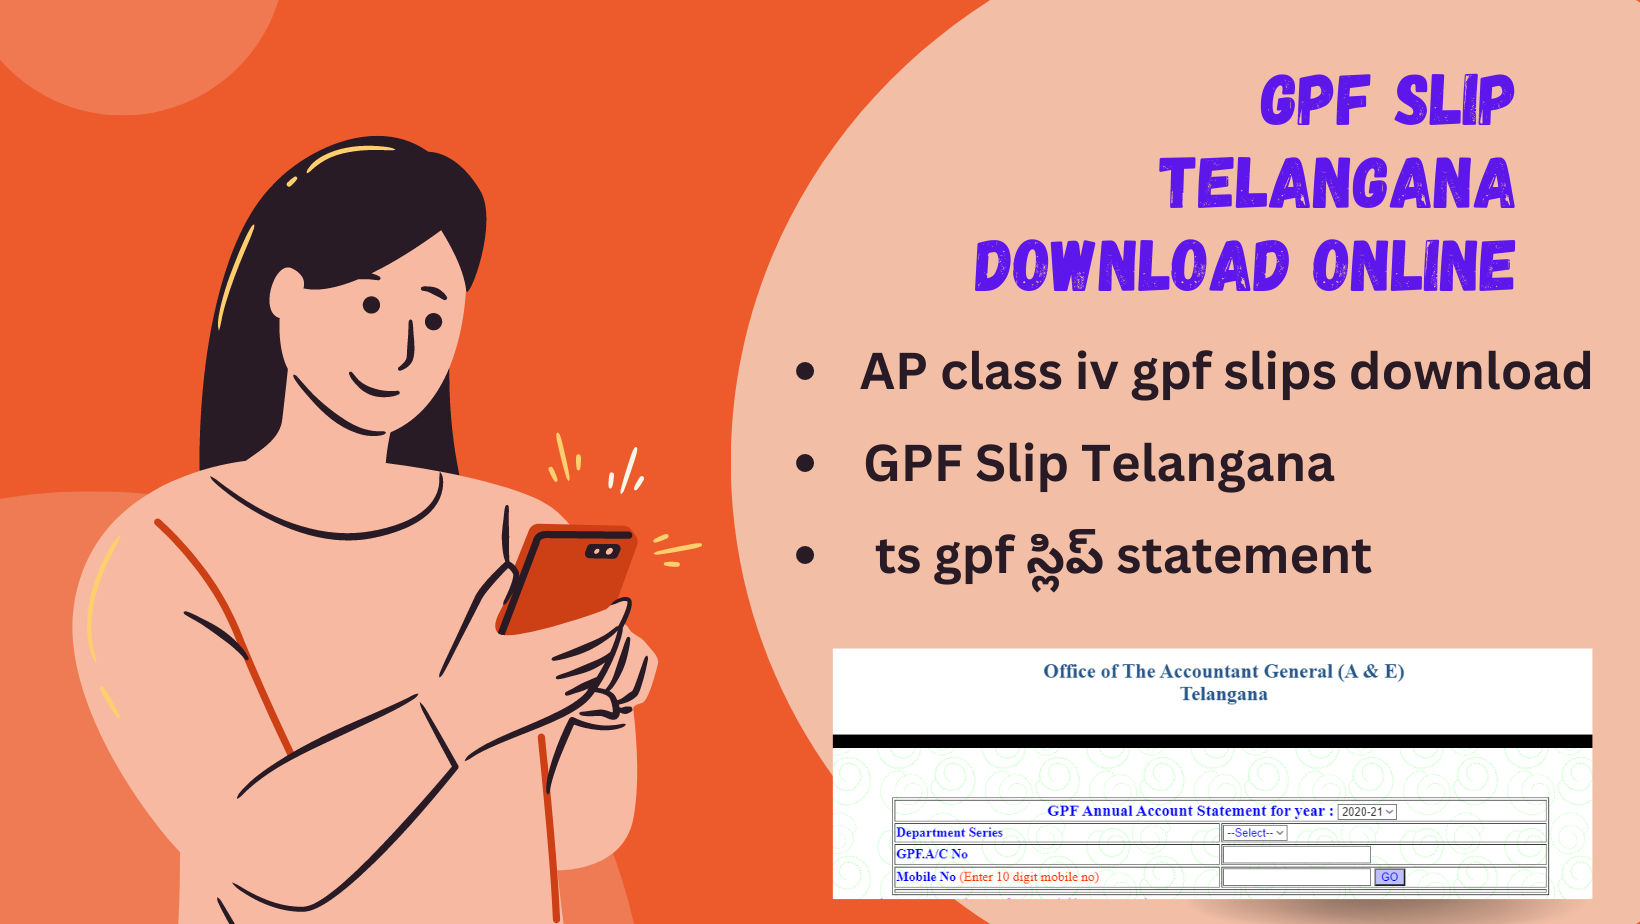 GPF Slip Telangana Download Online